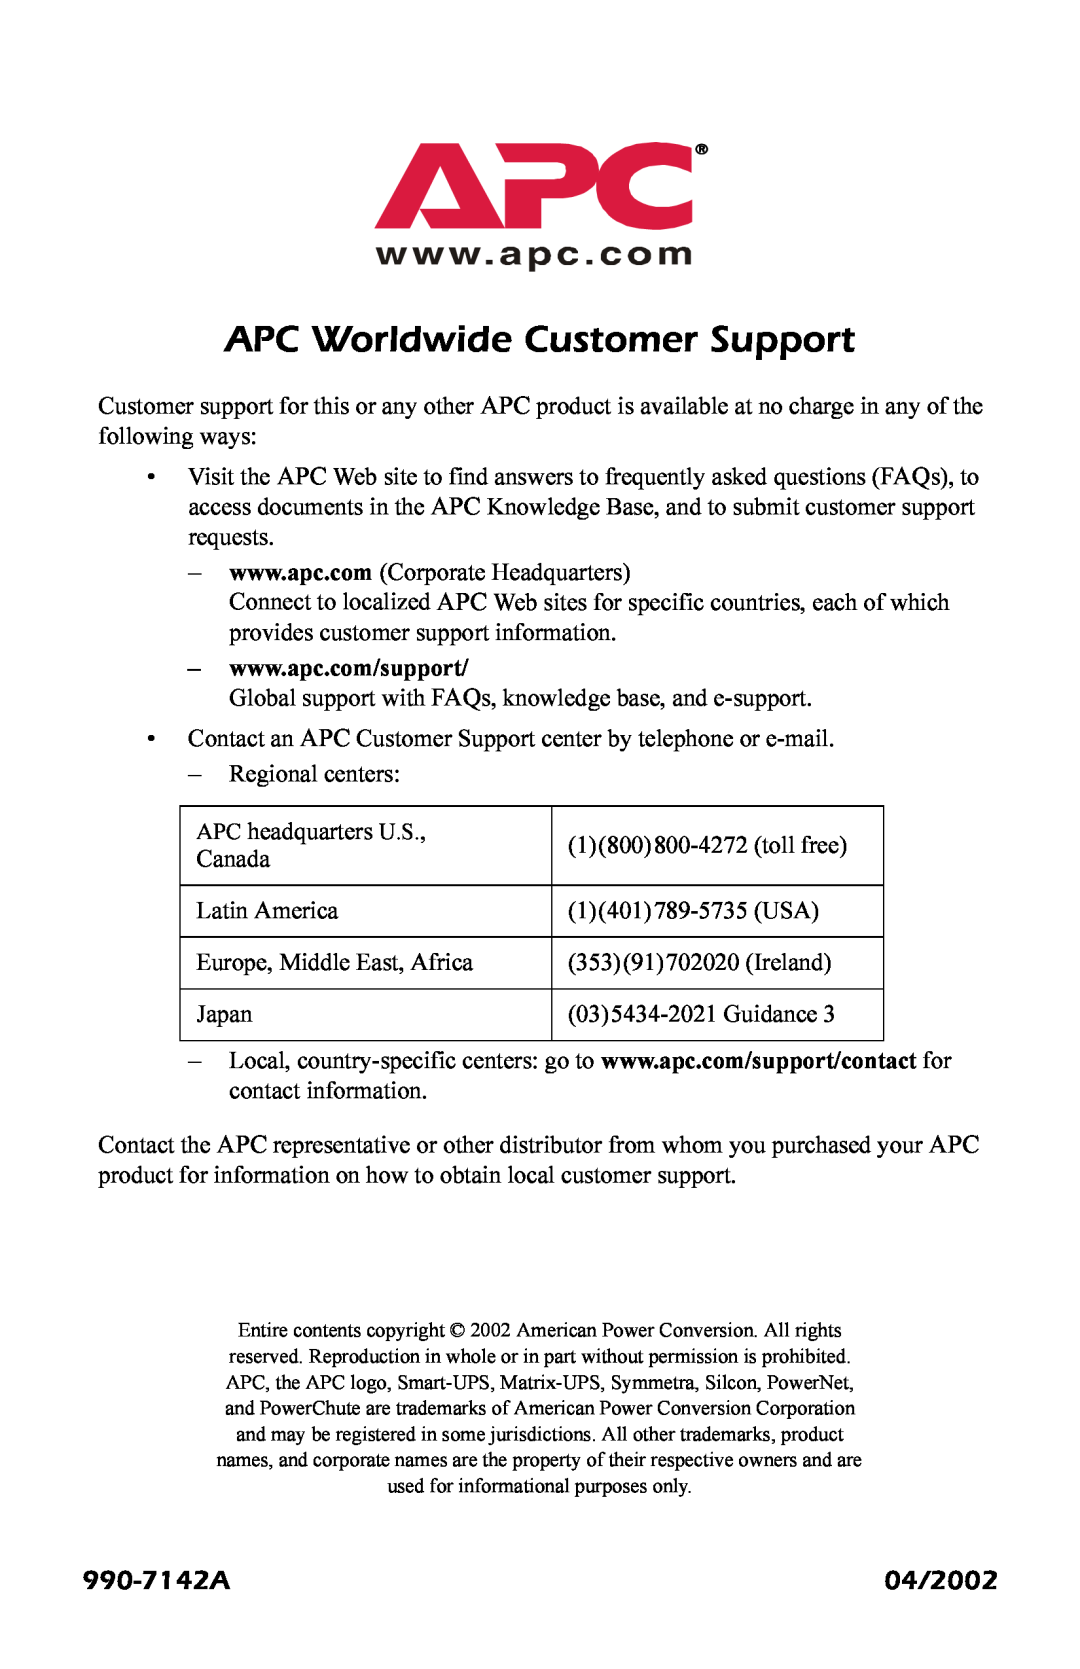 APC AP9619, AP9618 quick start manual APC Worldwide Customer Support, 990-7142A, 04/2002 